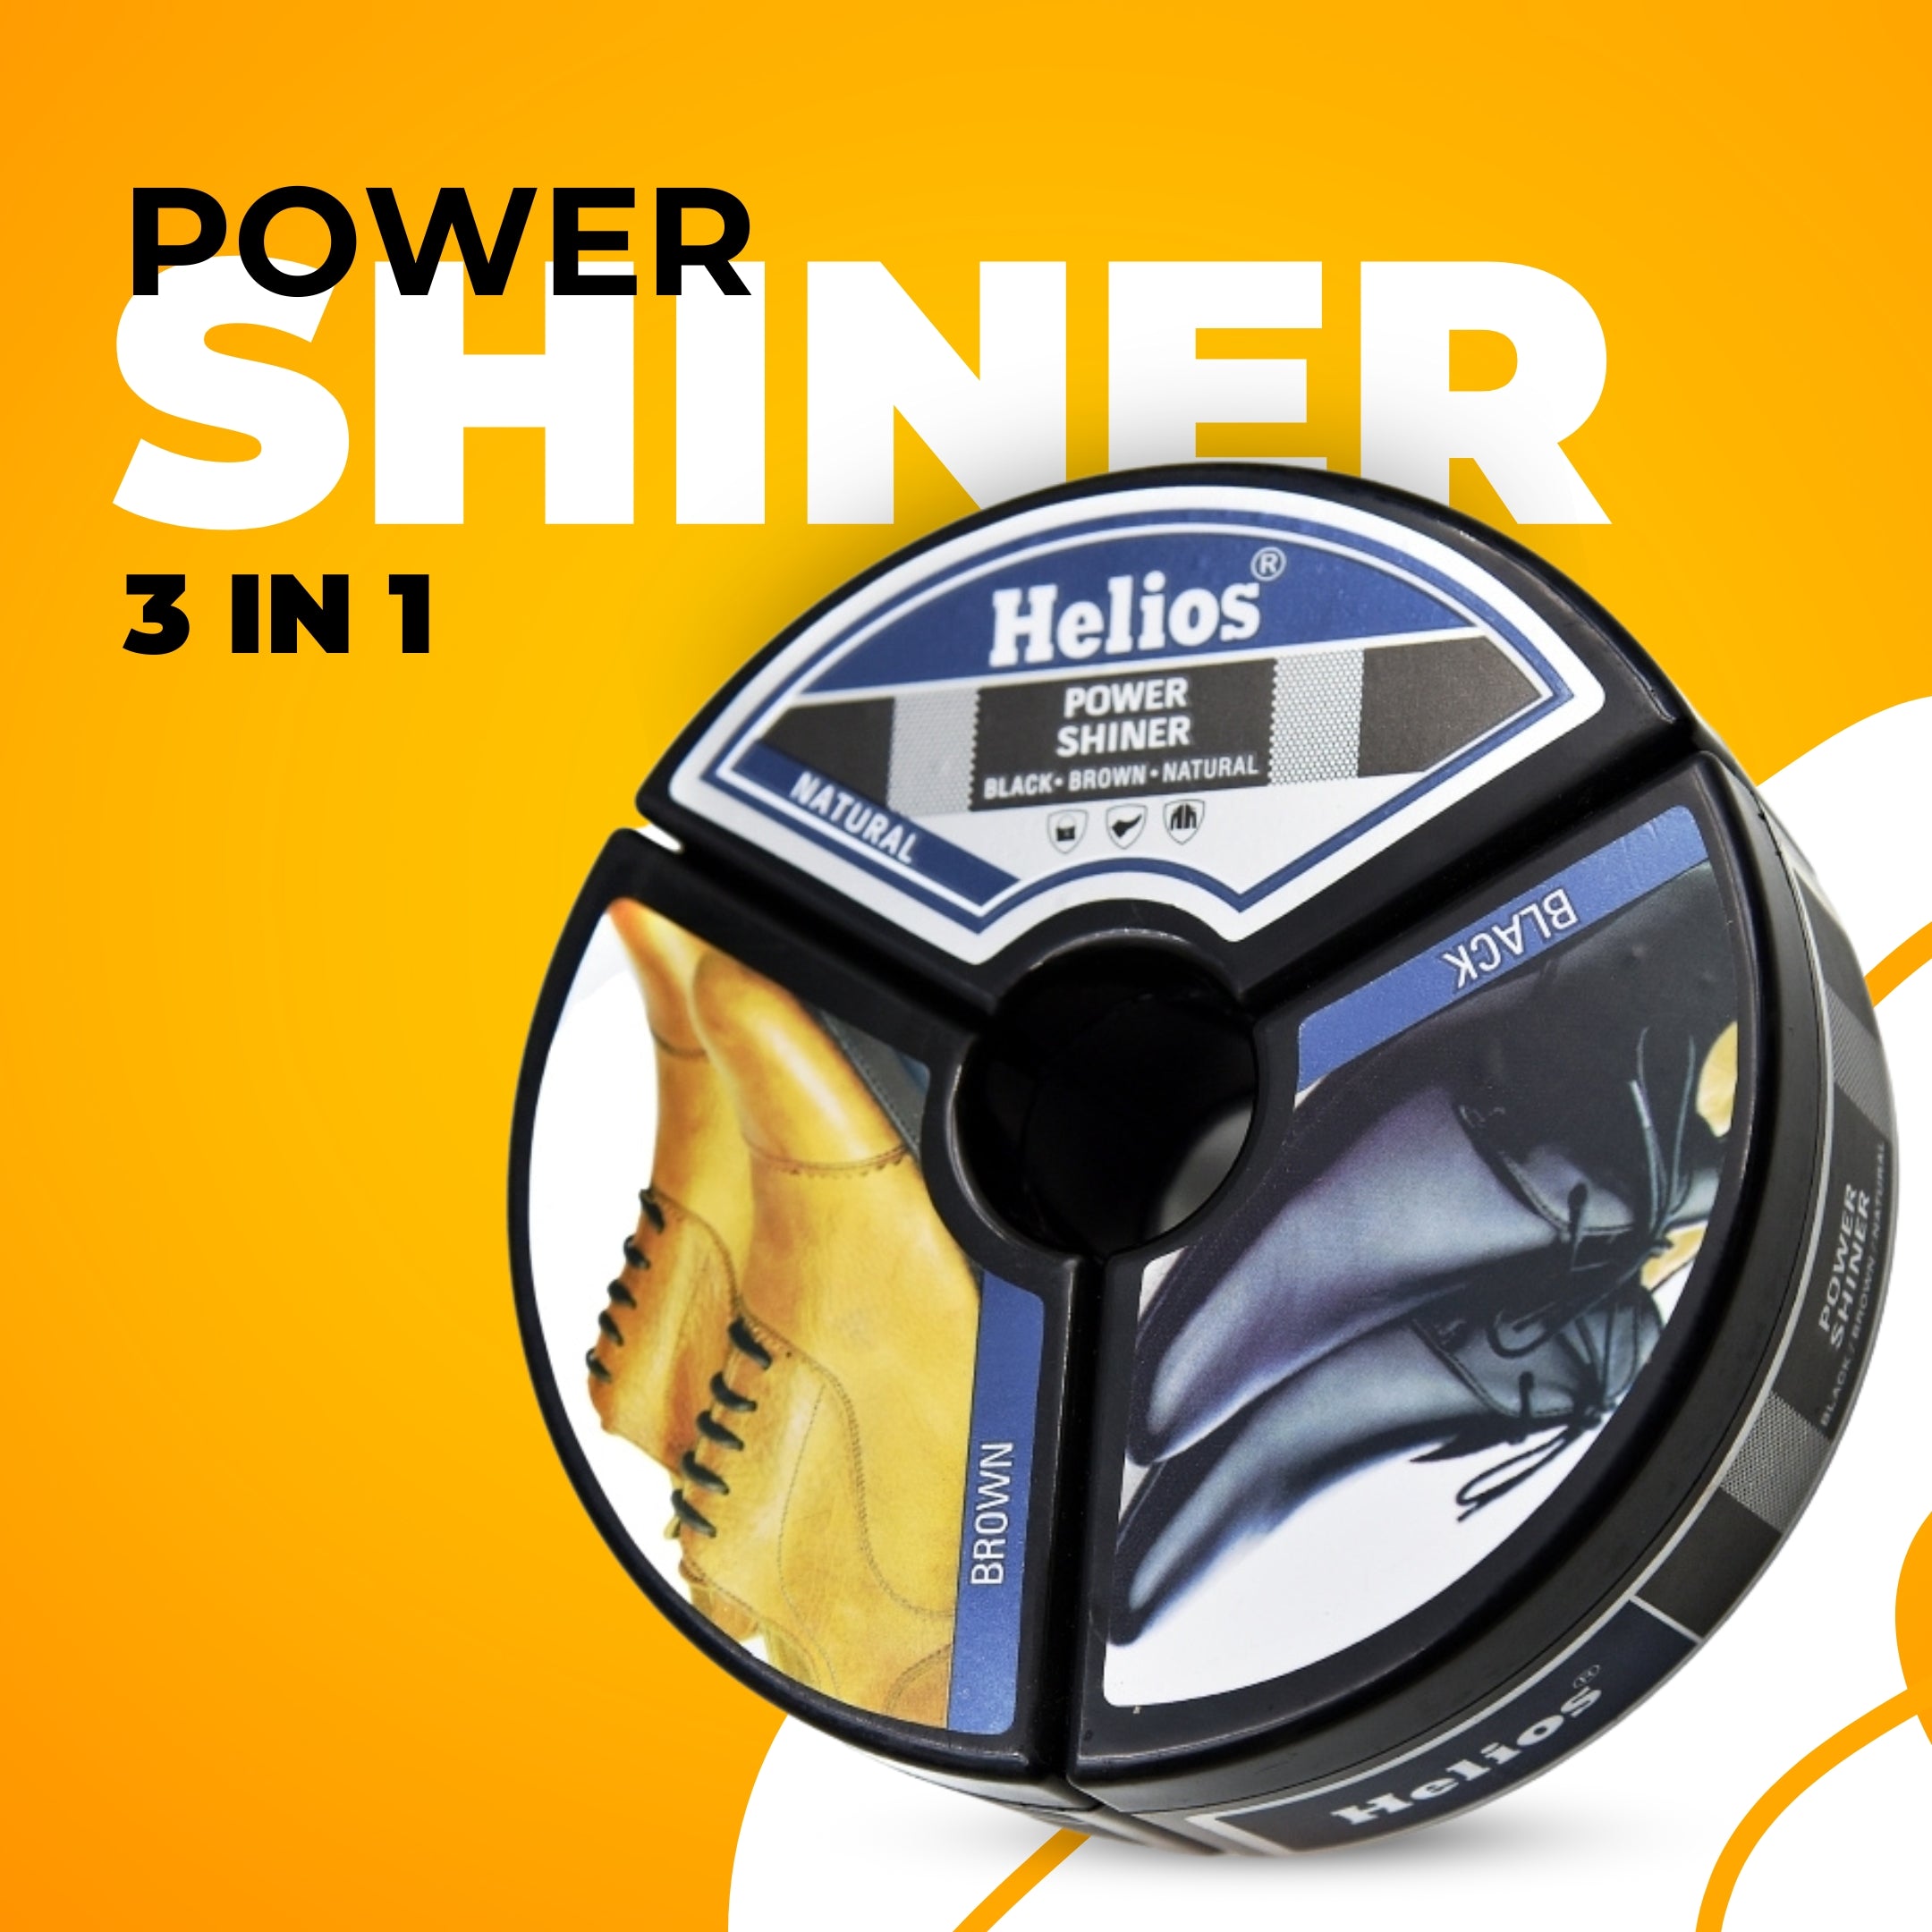 Helios Power Shiner 3 in 1